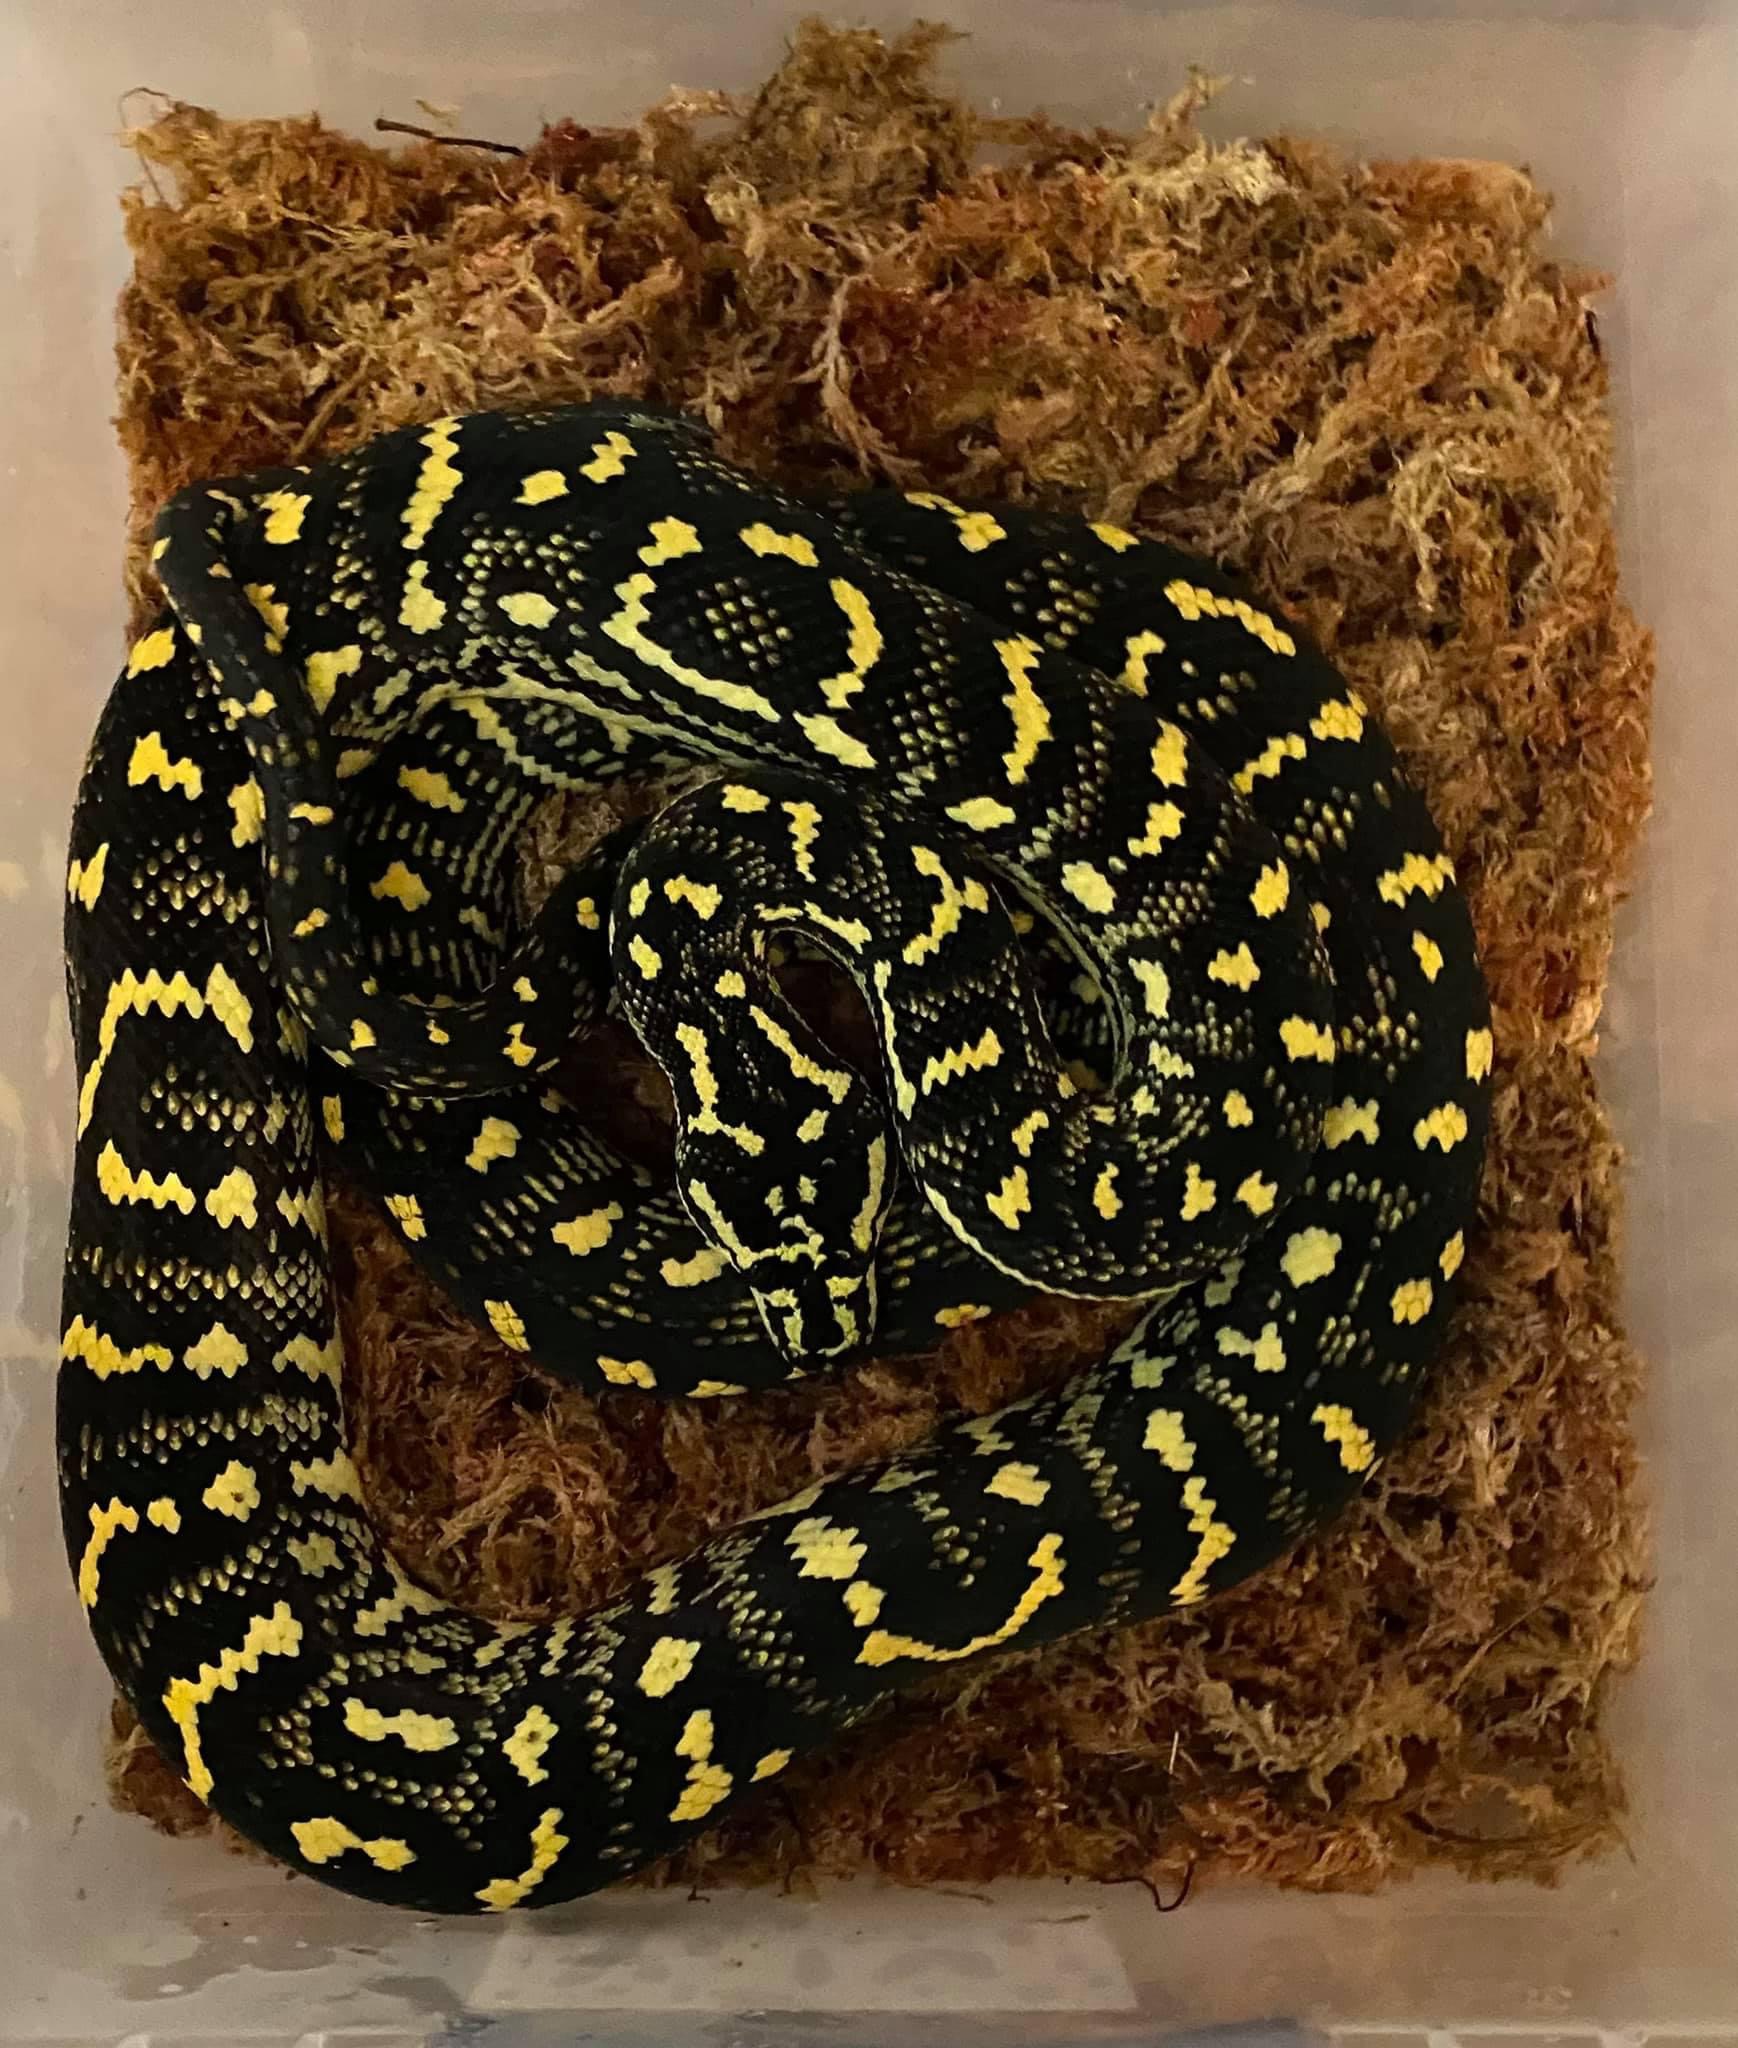 "Burlesque" Jungle Carpet Pythons for Sale